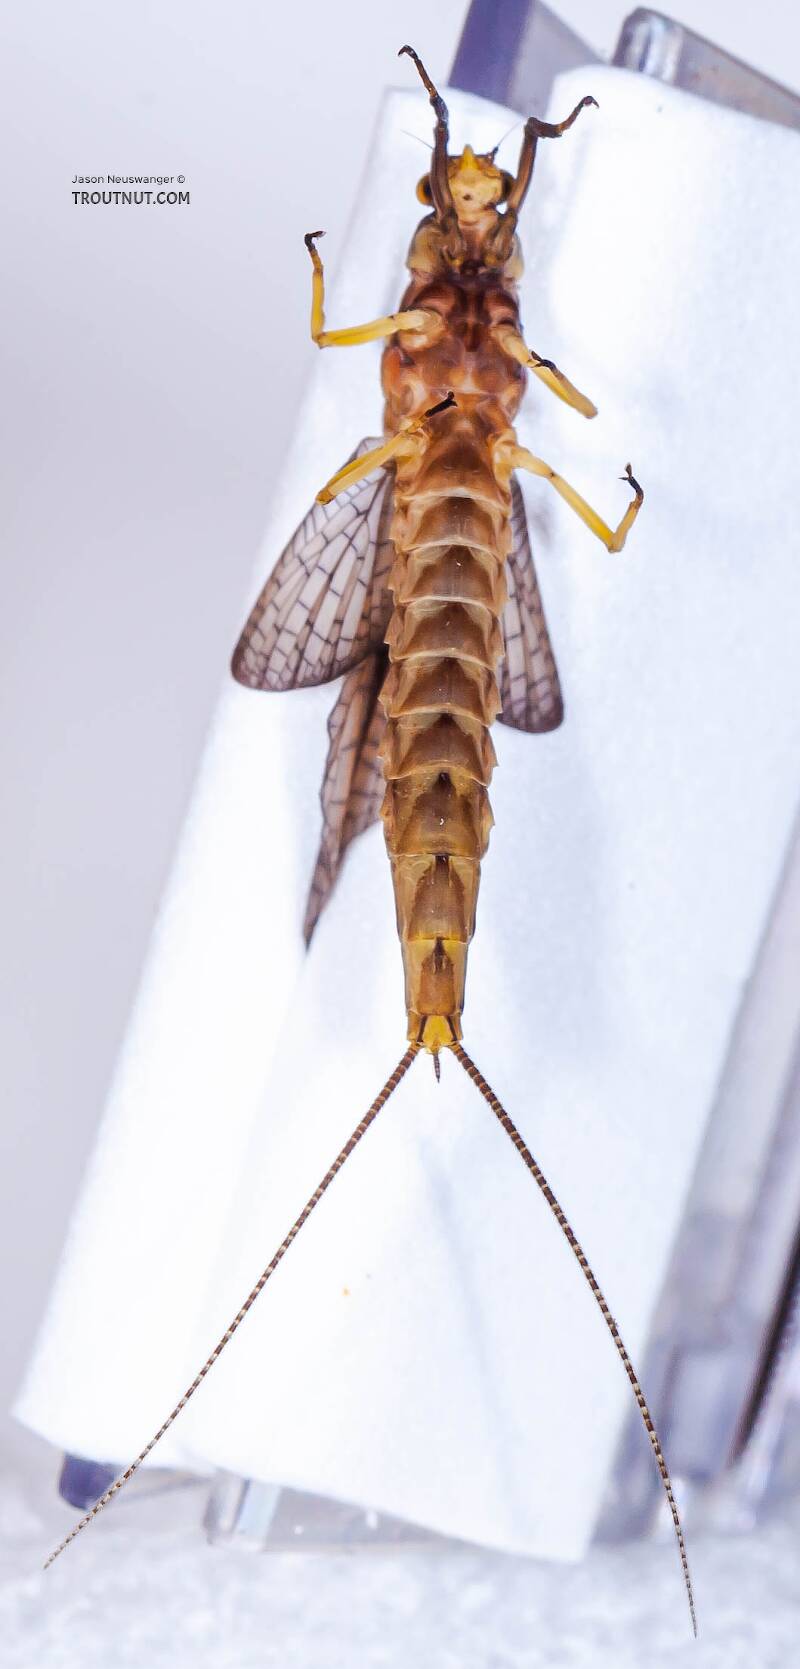 Female Hexagenia atrocaudata (Ephemeridae) (Late Hex) Mayfly Dun from the Teal River in Wisconsin